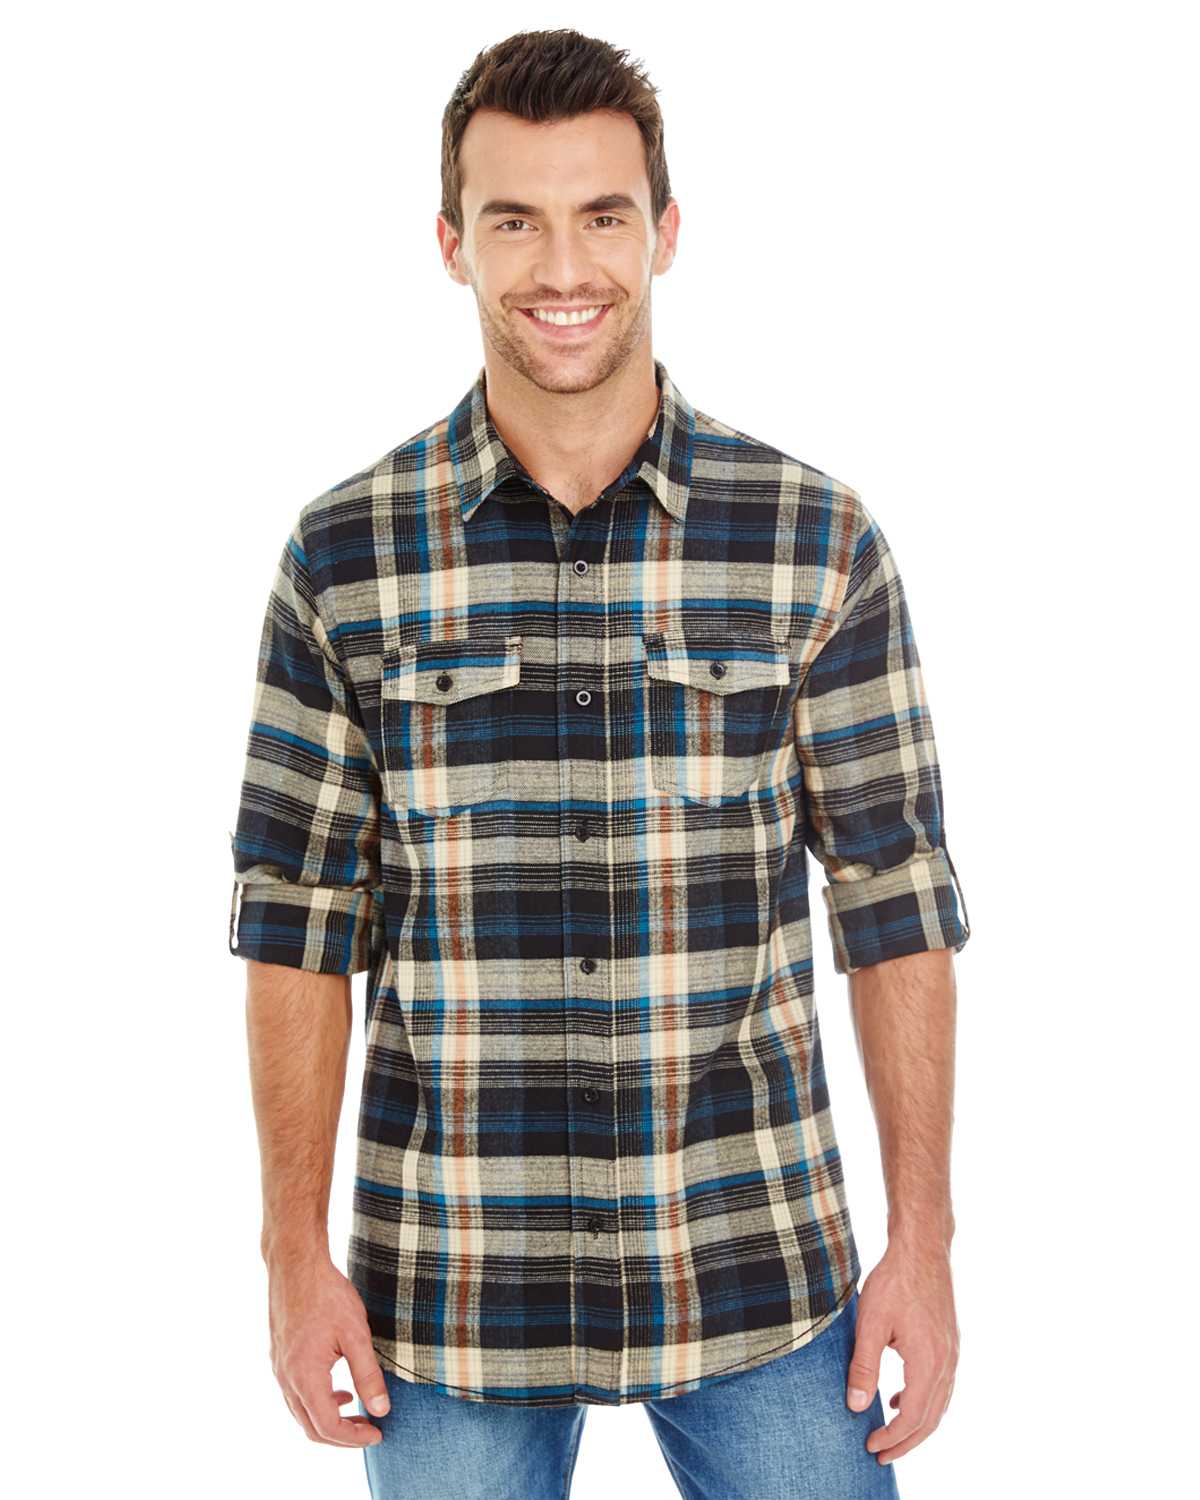 Burnside B8210 Mens Plaid Flannel Shirt | ApparelChoice.com